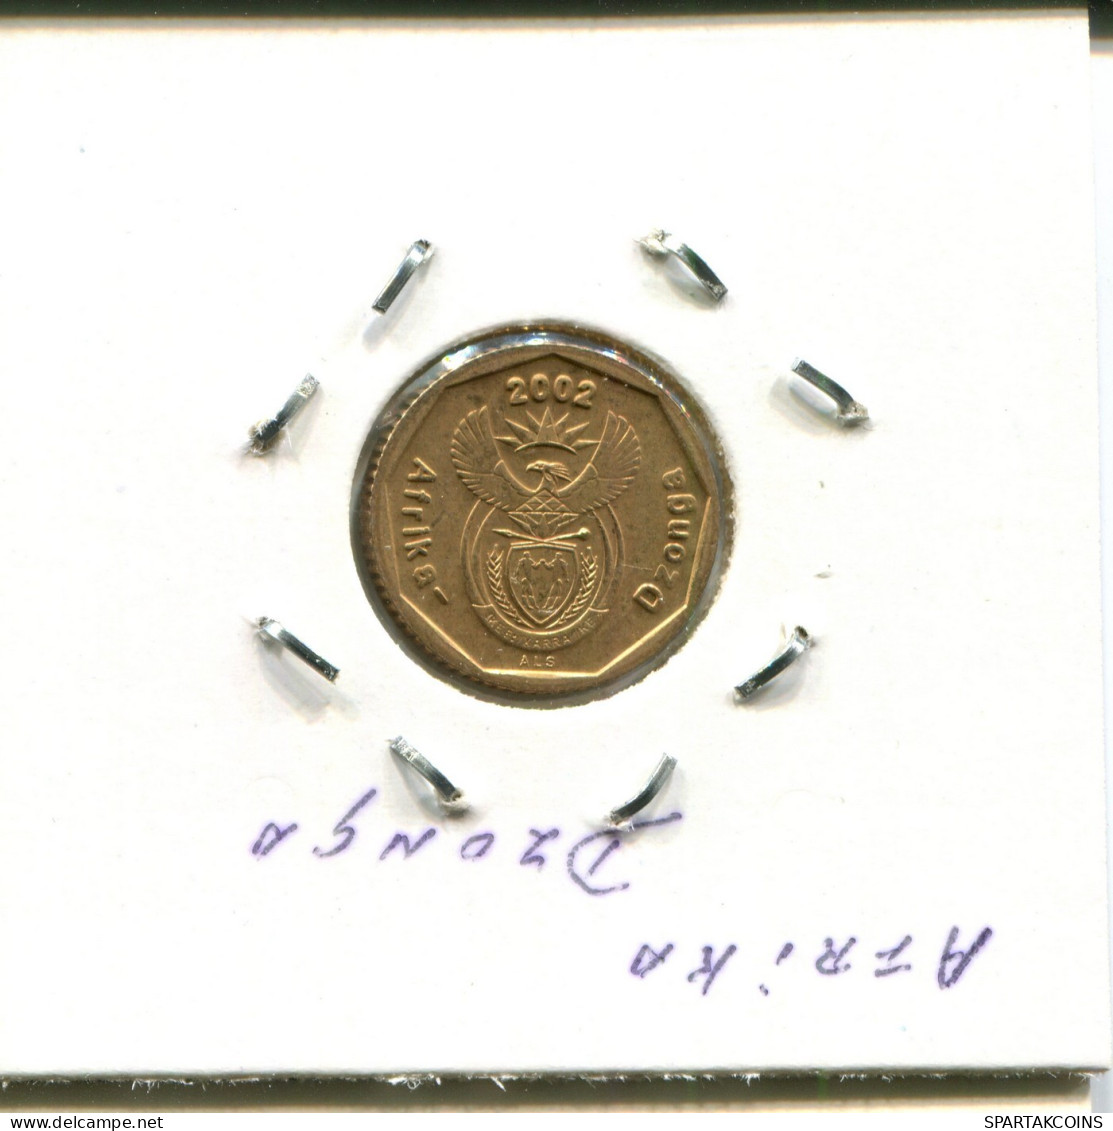 10 CENTS 2002 SUDAFRICA SOUTH AFRICA Moneda #AX227.E.A - Sud Africa